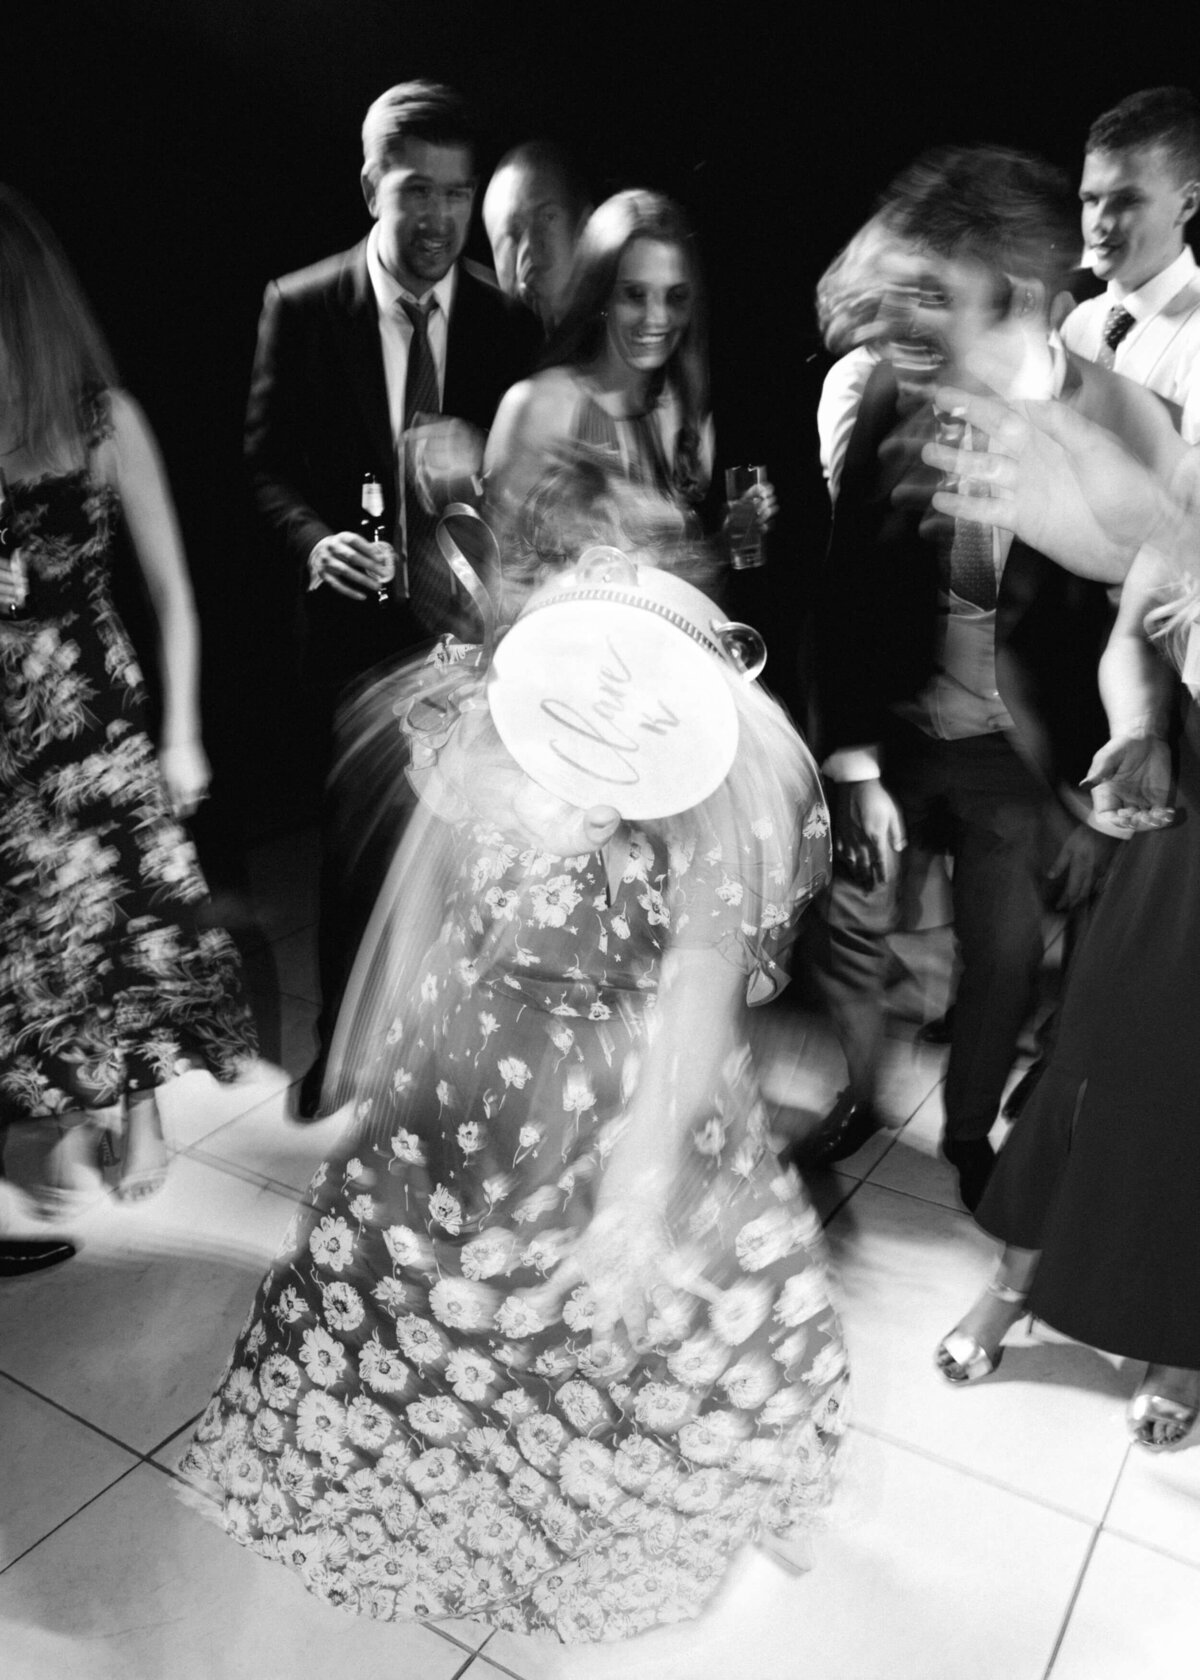 chloe-winstanley-weddings-guest-dancing-tambourine